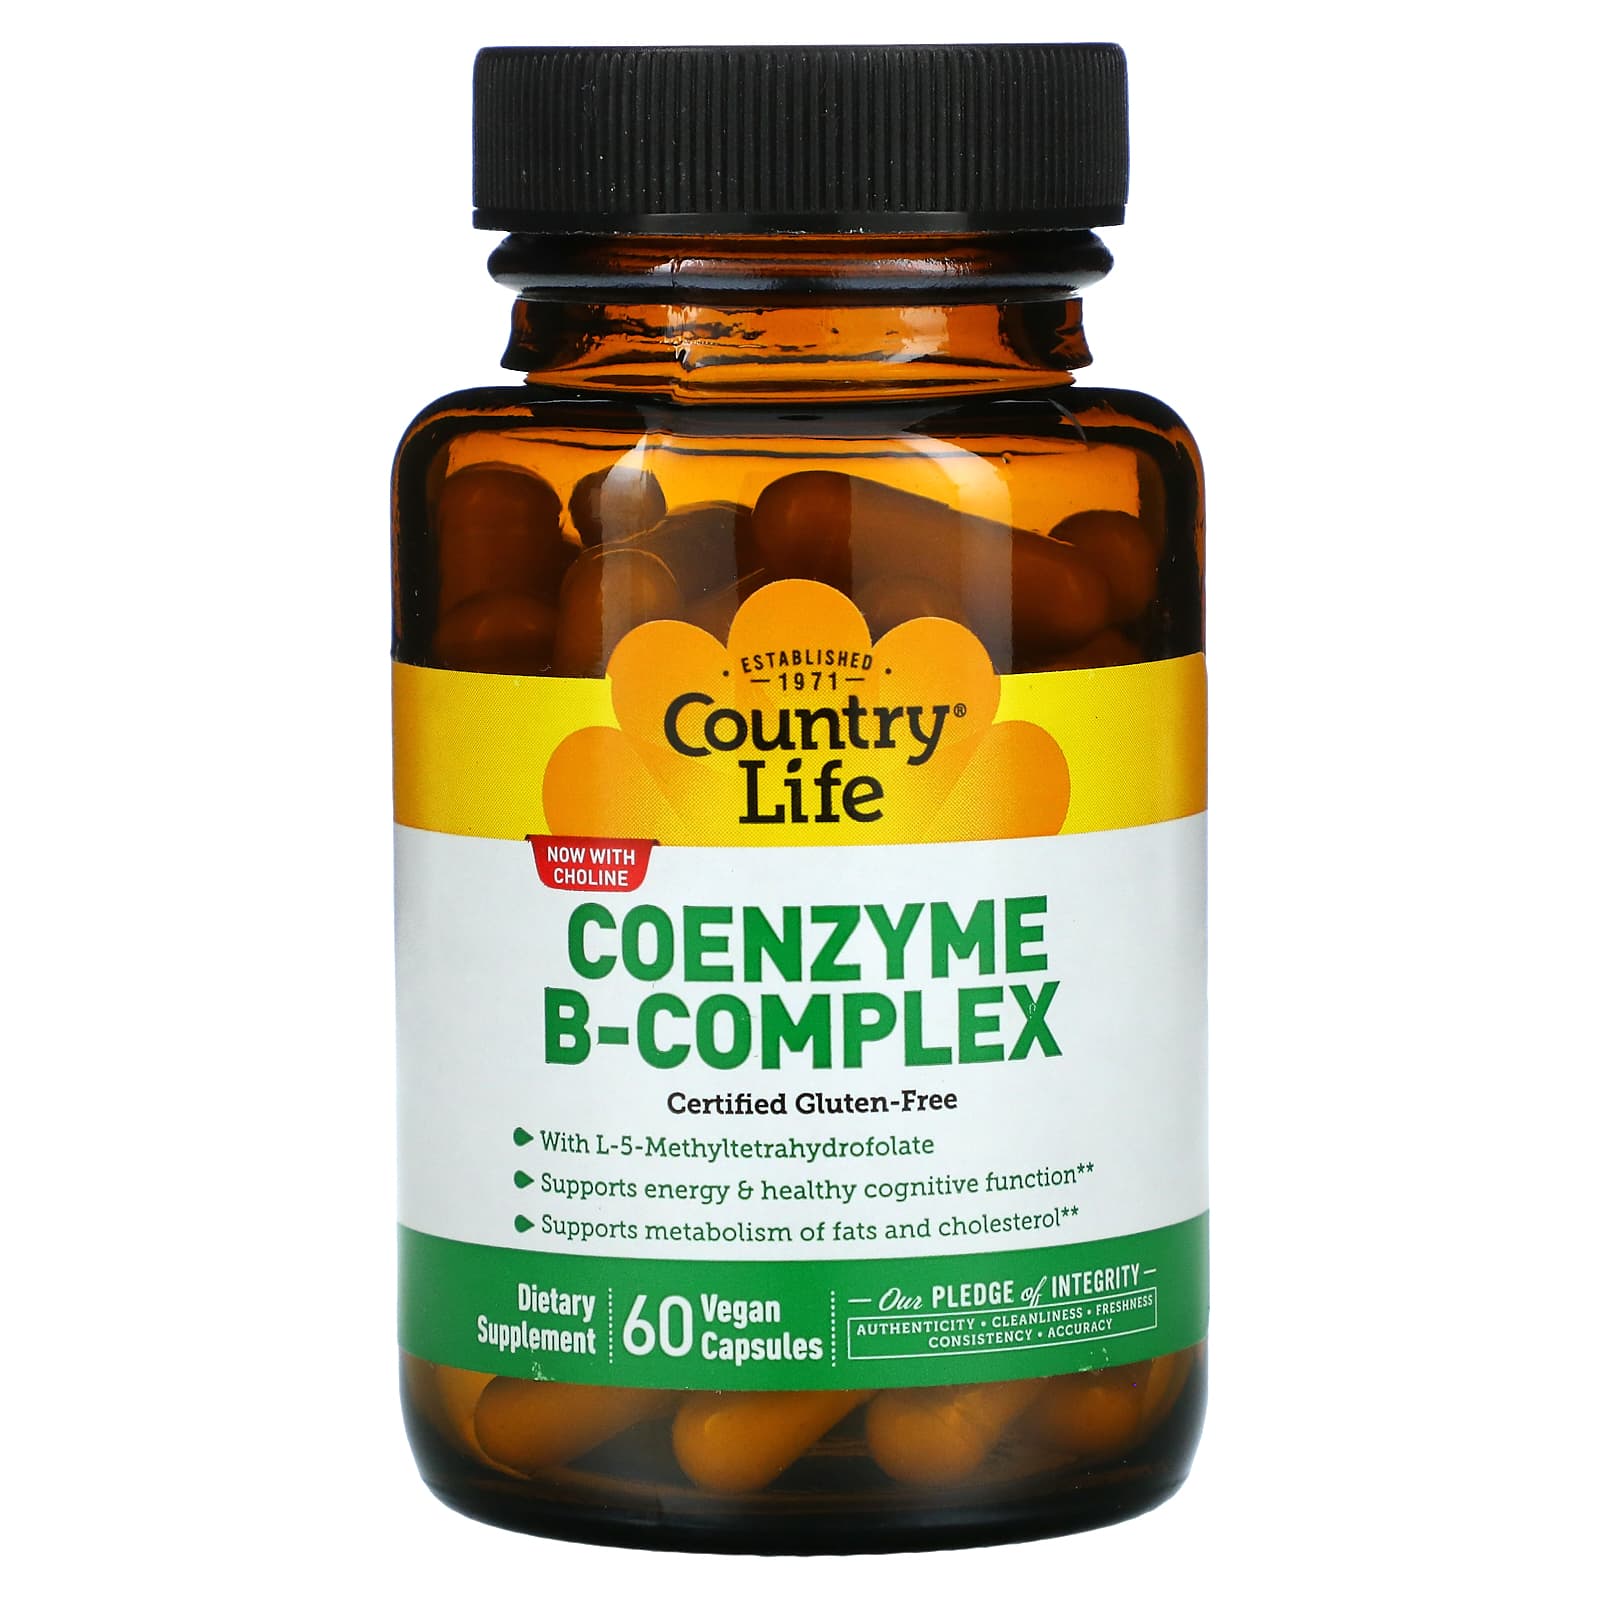 Country Life Coenzyme B-Complex Caps, 60 Vegan Capsules